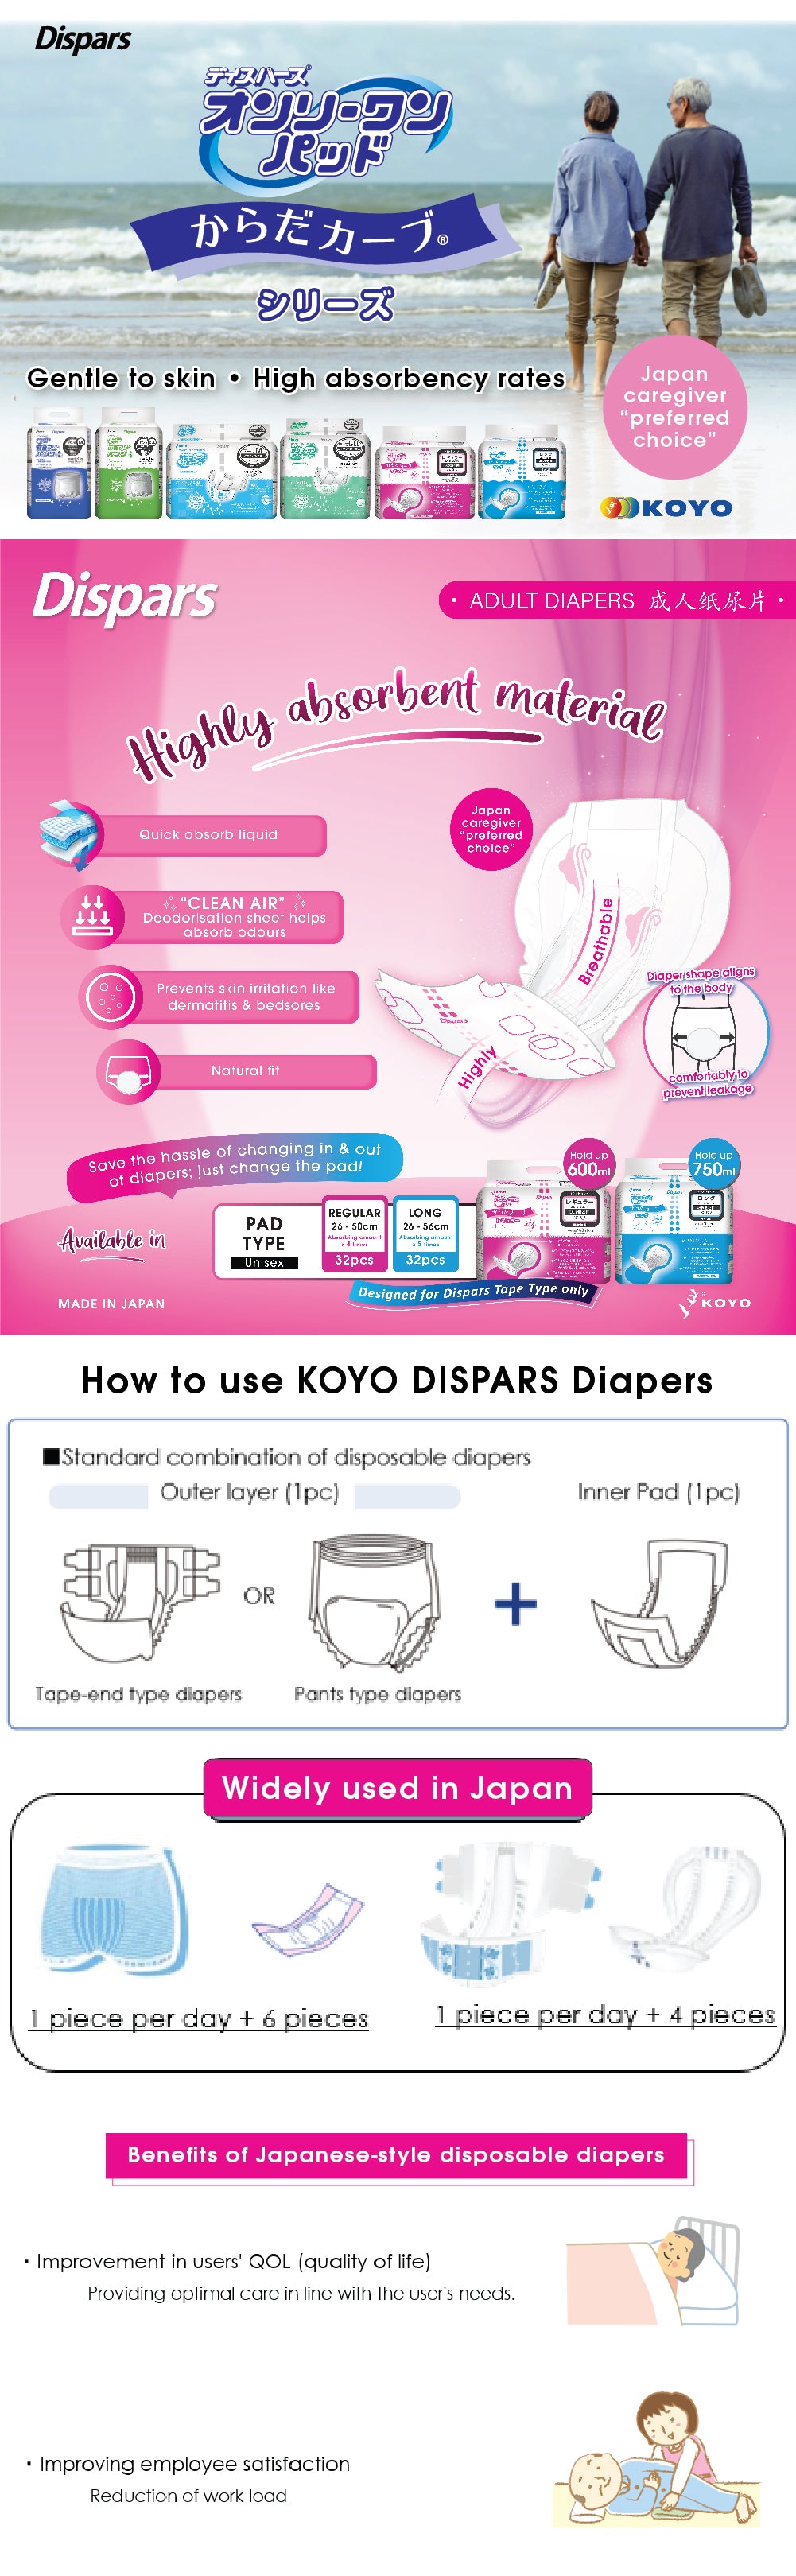 Dispars Only One Unisex Adult Diaper Pads Carton Pack (Regular) 【8x32pcs per carton】